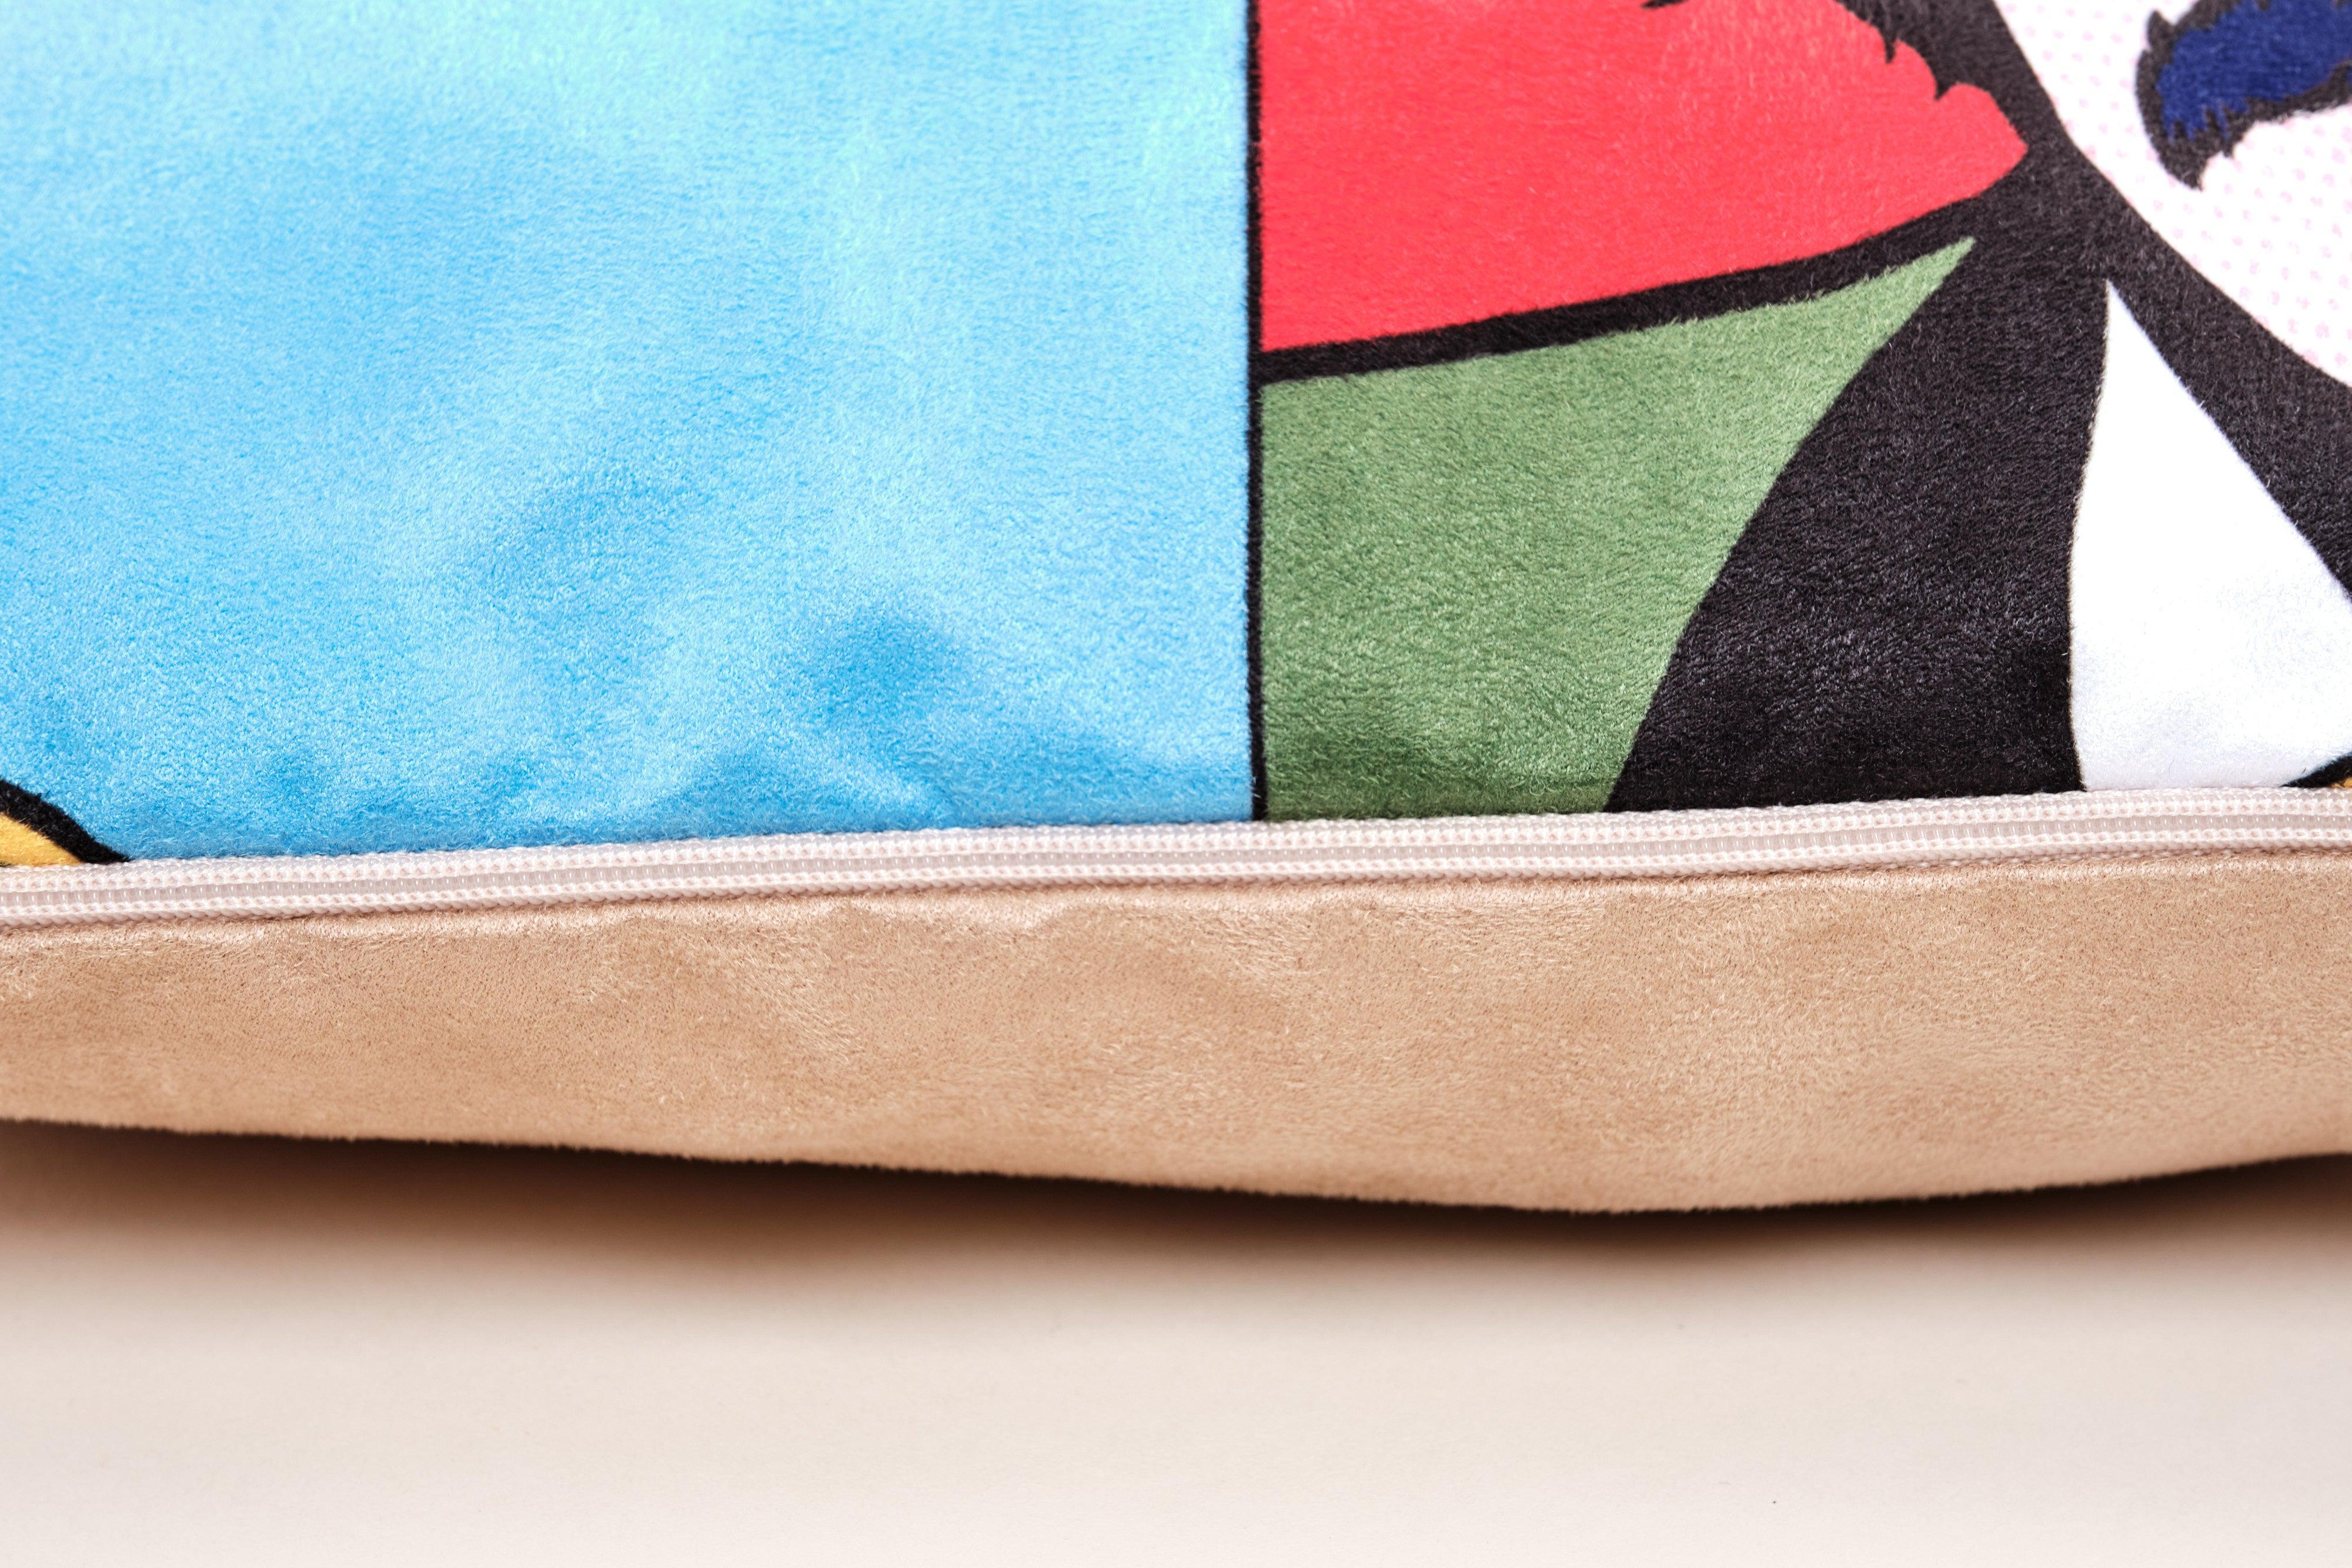 Arrow Green - Abstract Cushion - Handmade Cushions UK - WeLoveCushions